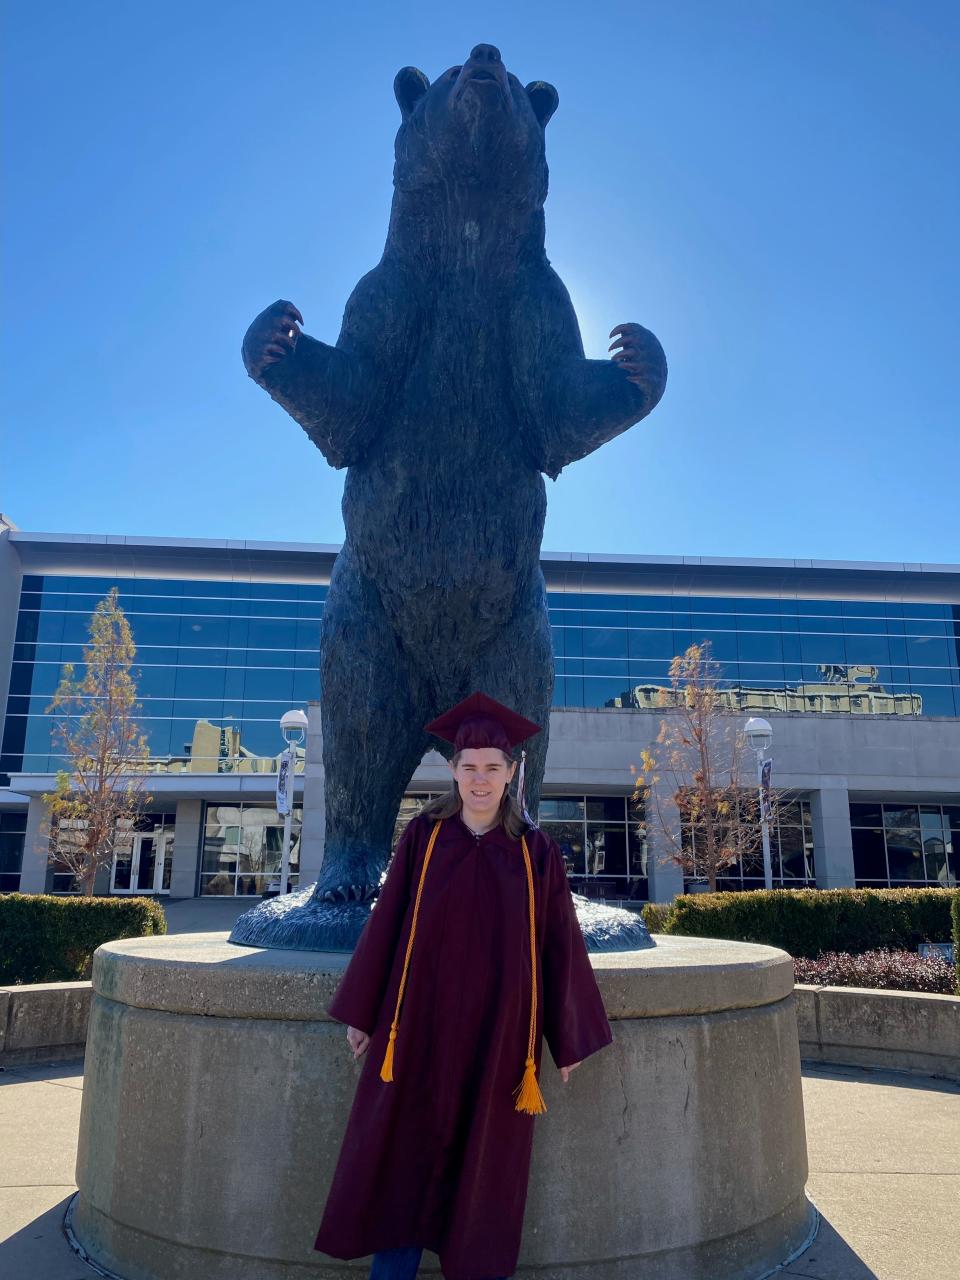 Hanna Smulczenski graduated from Missouri State University on Dec. 15. She was part of the Bear POWER program